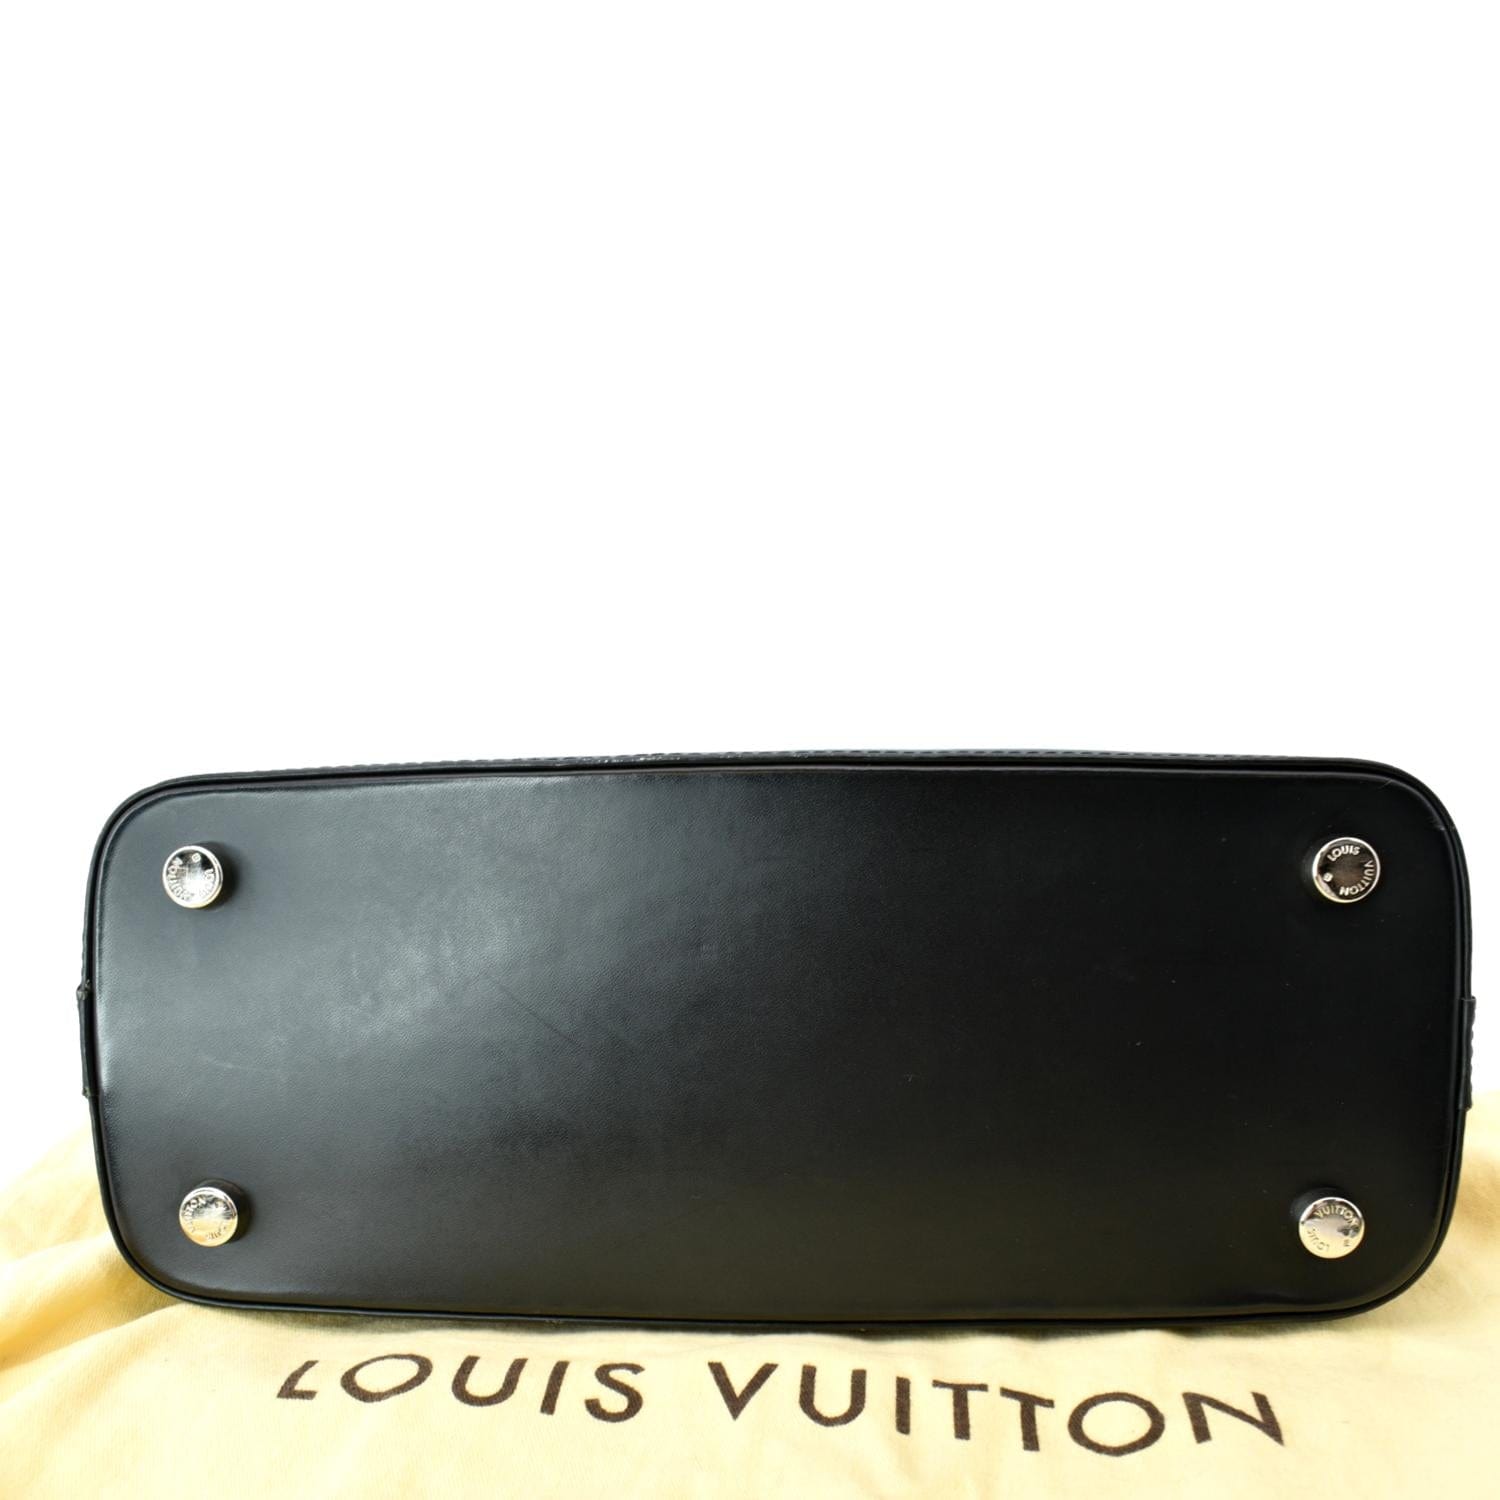 Sold at Auction: Louis Vuitton, LOUIS VUITTON, MIRABEAU PM HANDBAG, CIRCA  2011